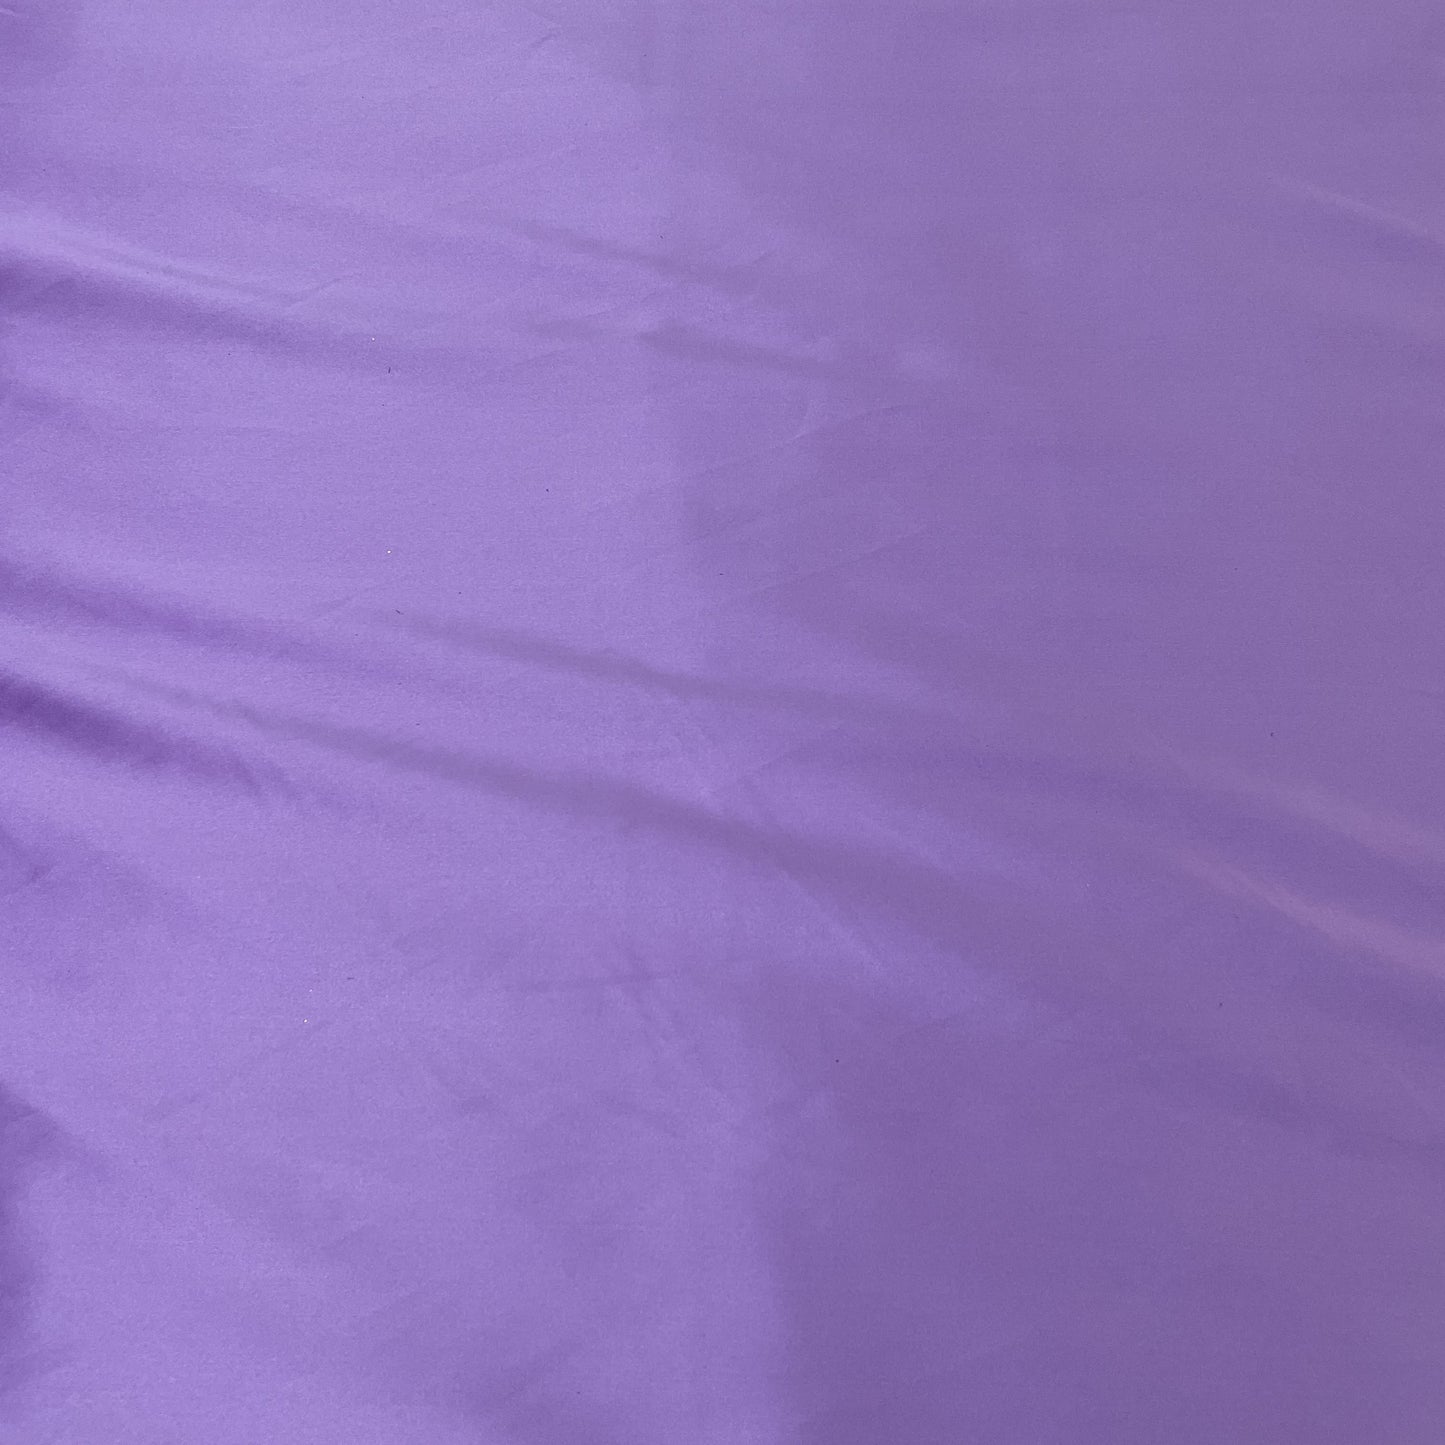 Exclusive Lavender Solid Celina Satin Fabric